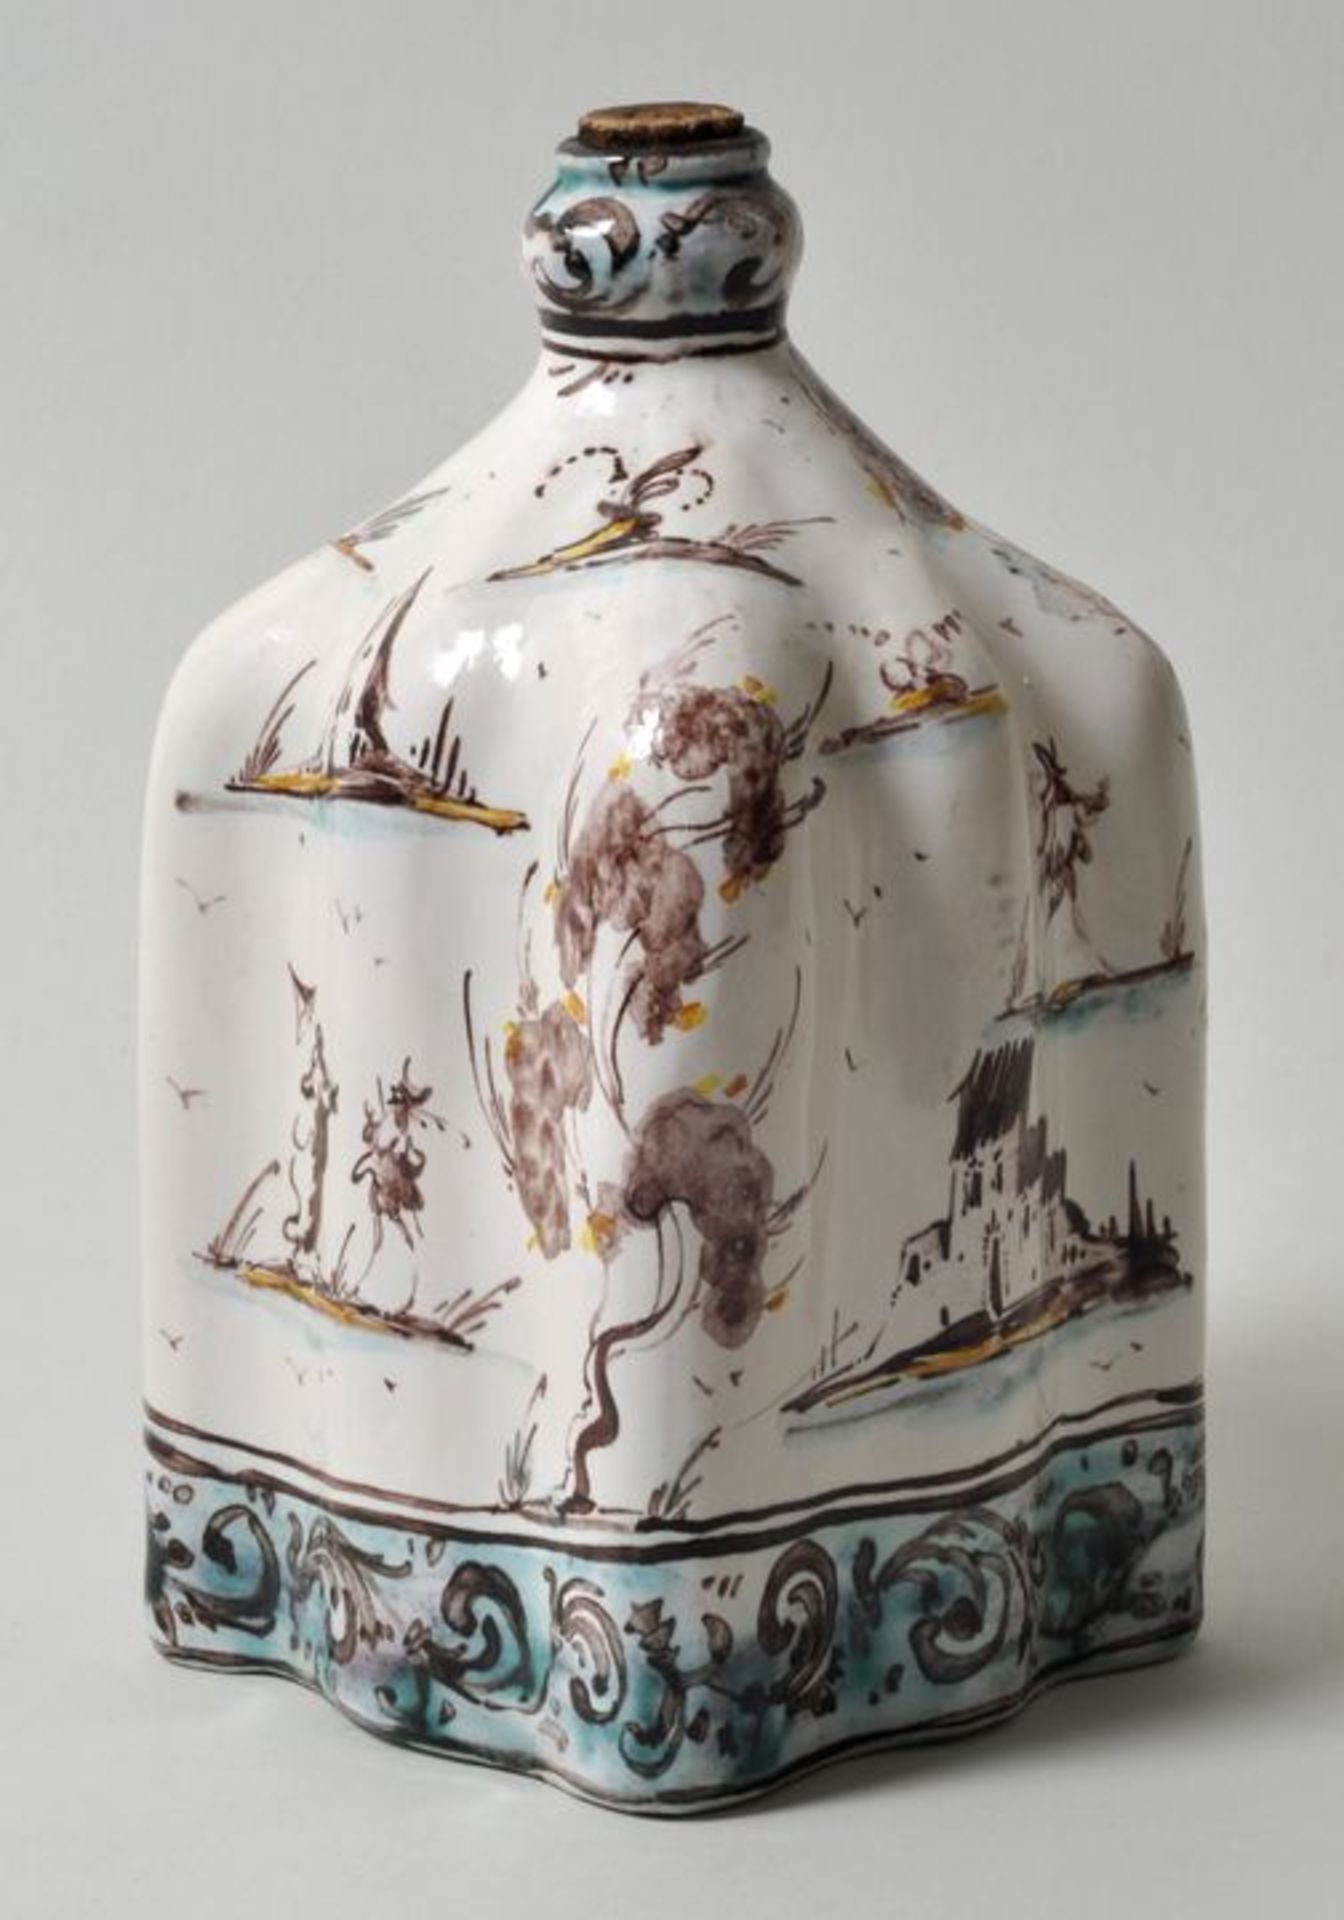 Flasche, Savona (Italien), Werkstatt des Angelo Levantino, um 1750Majolika, opak weiße Blei-Zinn-